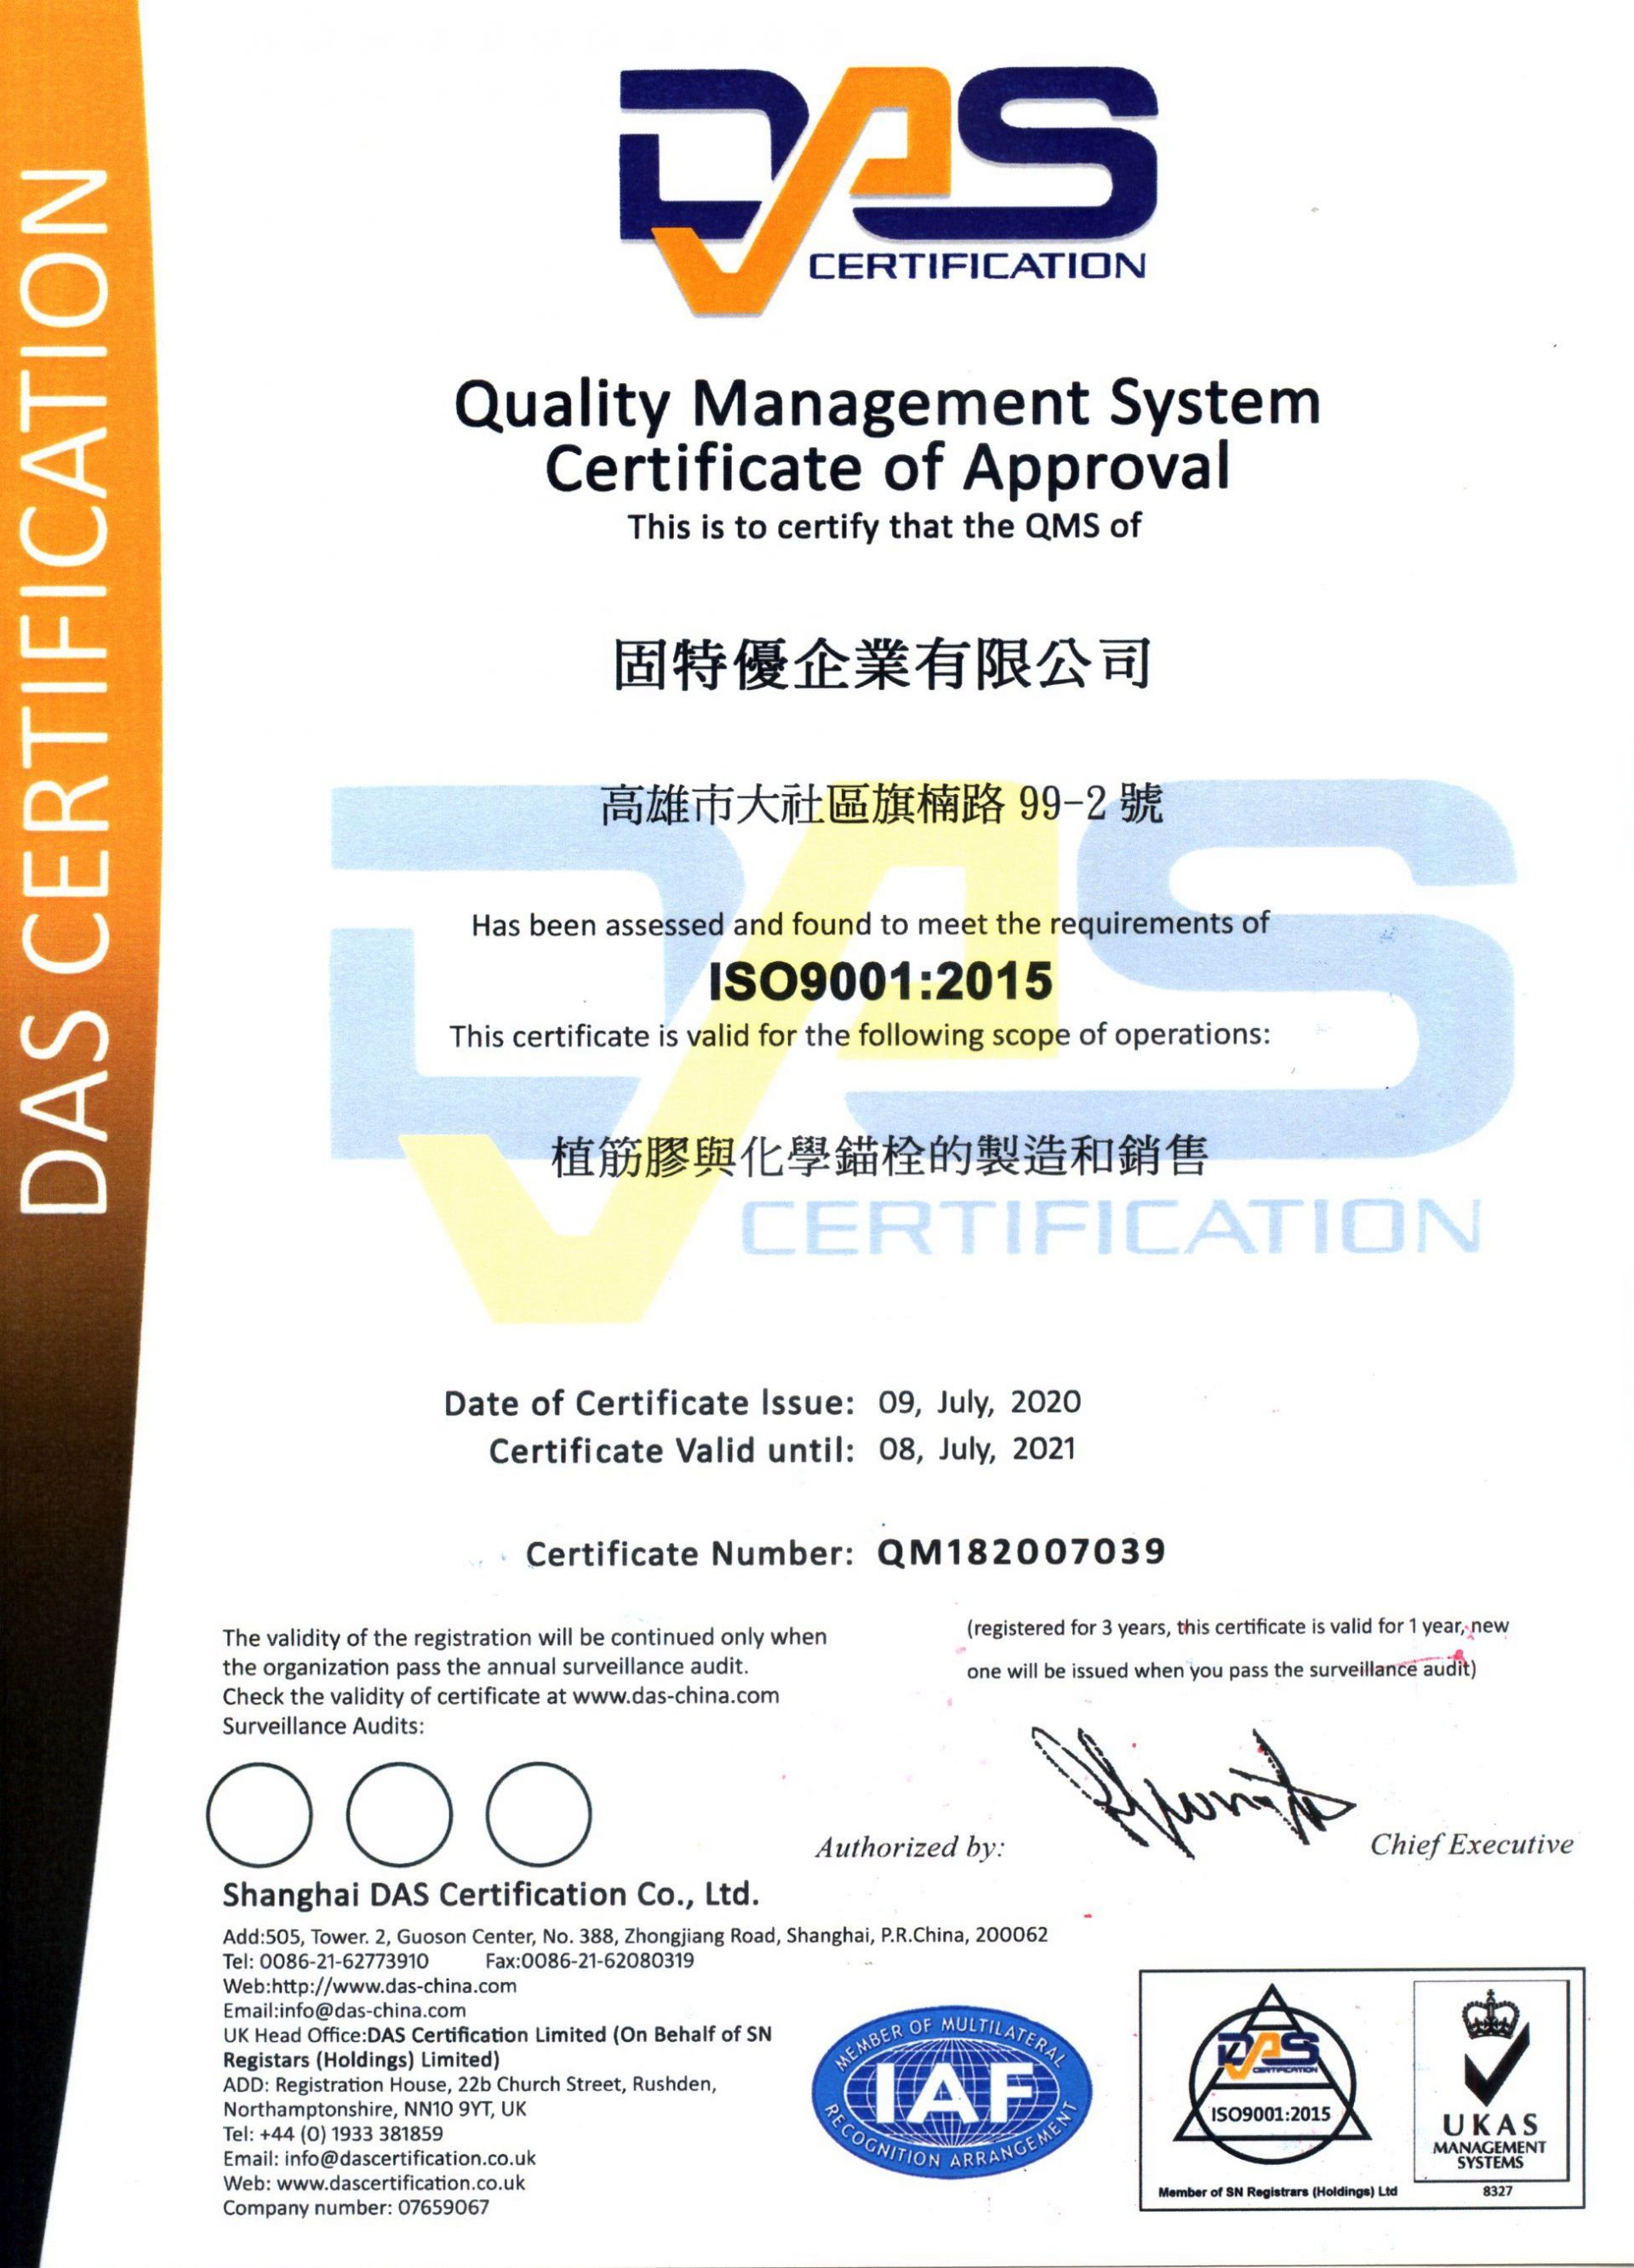 ISO9001:2015認證